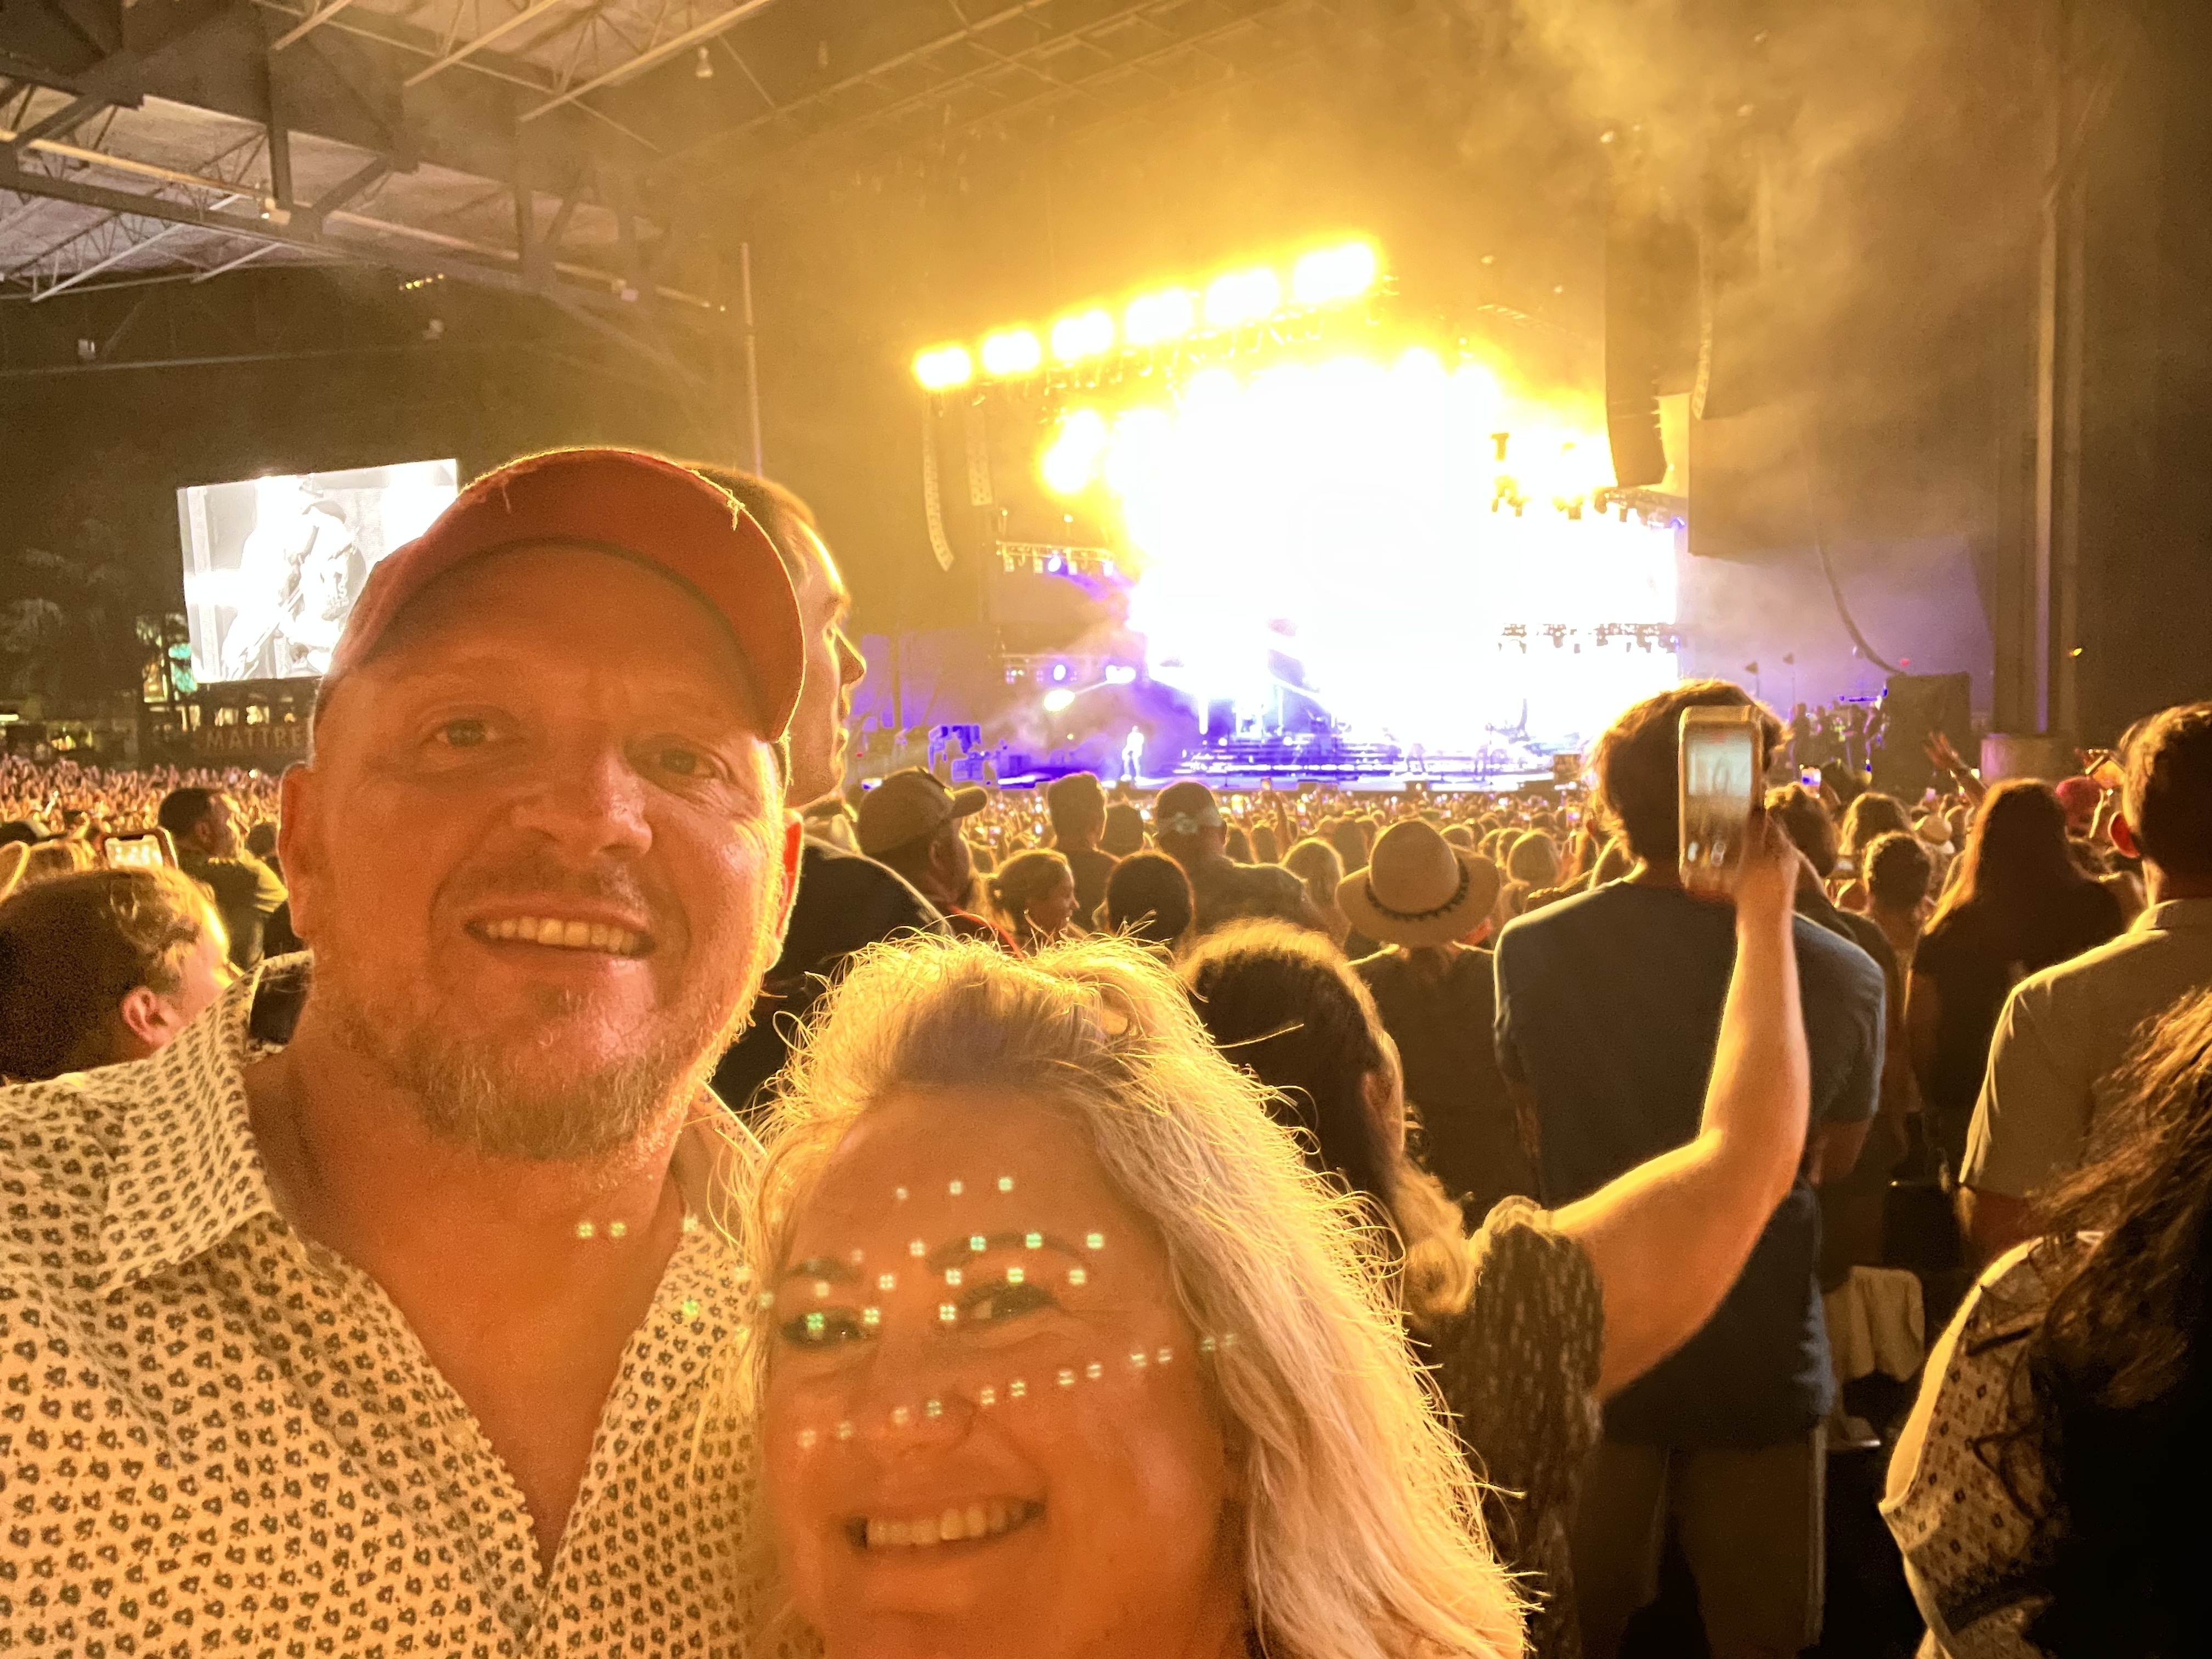 Jason Aldean: Rock N' Roll Cowboy Tour 2022